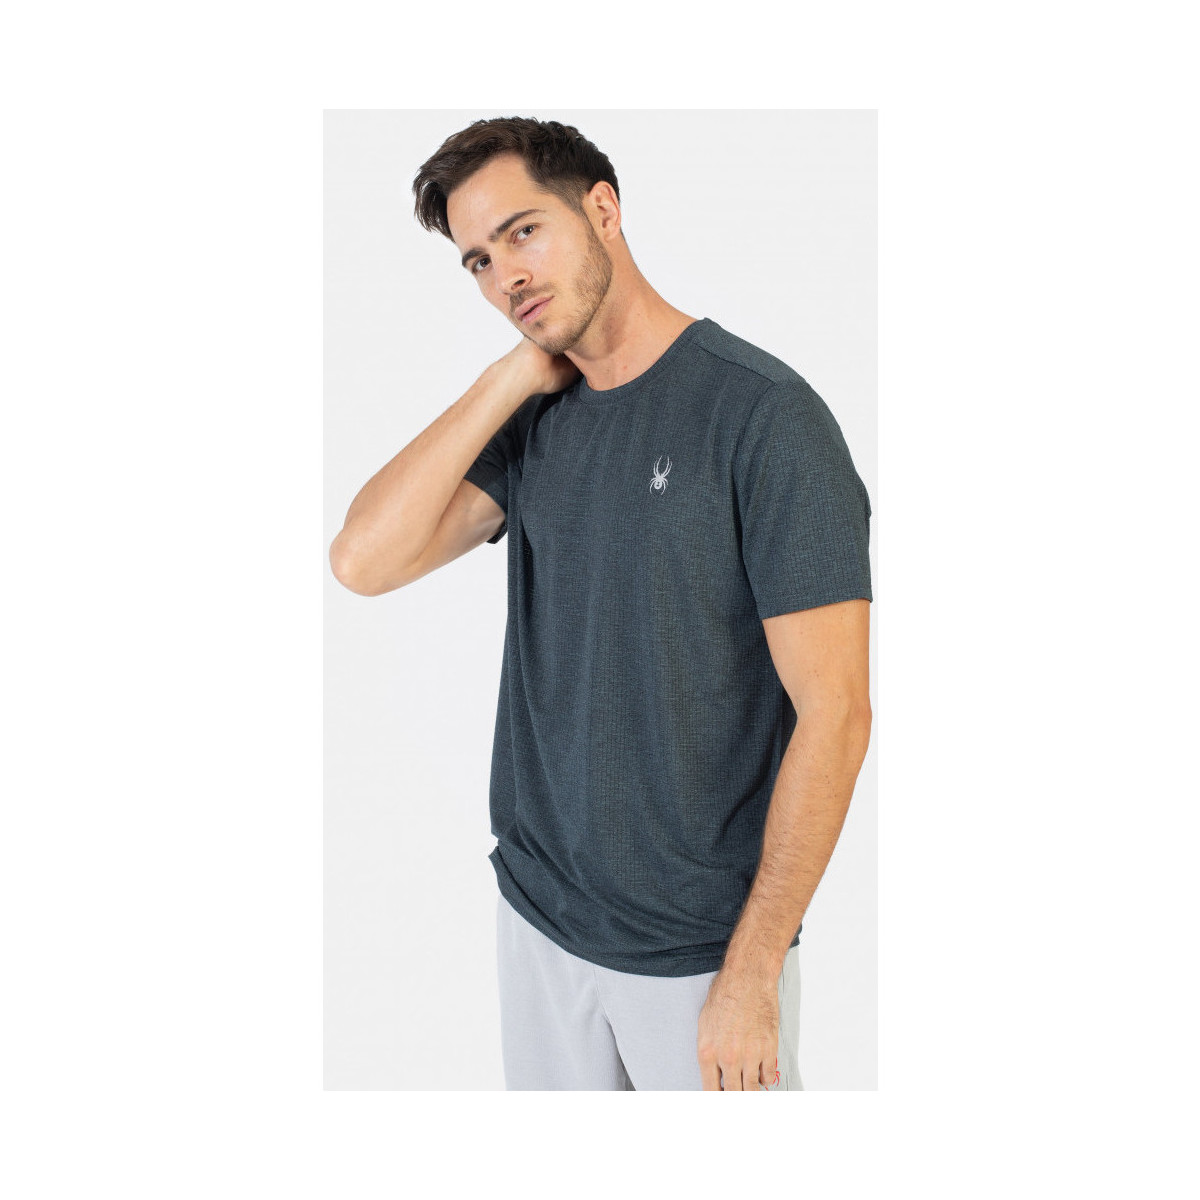 Vêtements Homme T-shirts manches courtes Spyder T-shirt manches courtes Quick-Drying UV Protection Noir